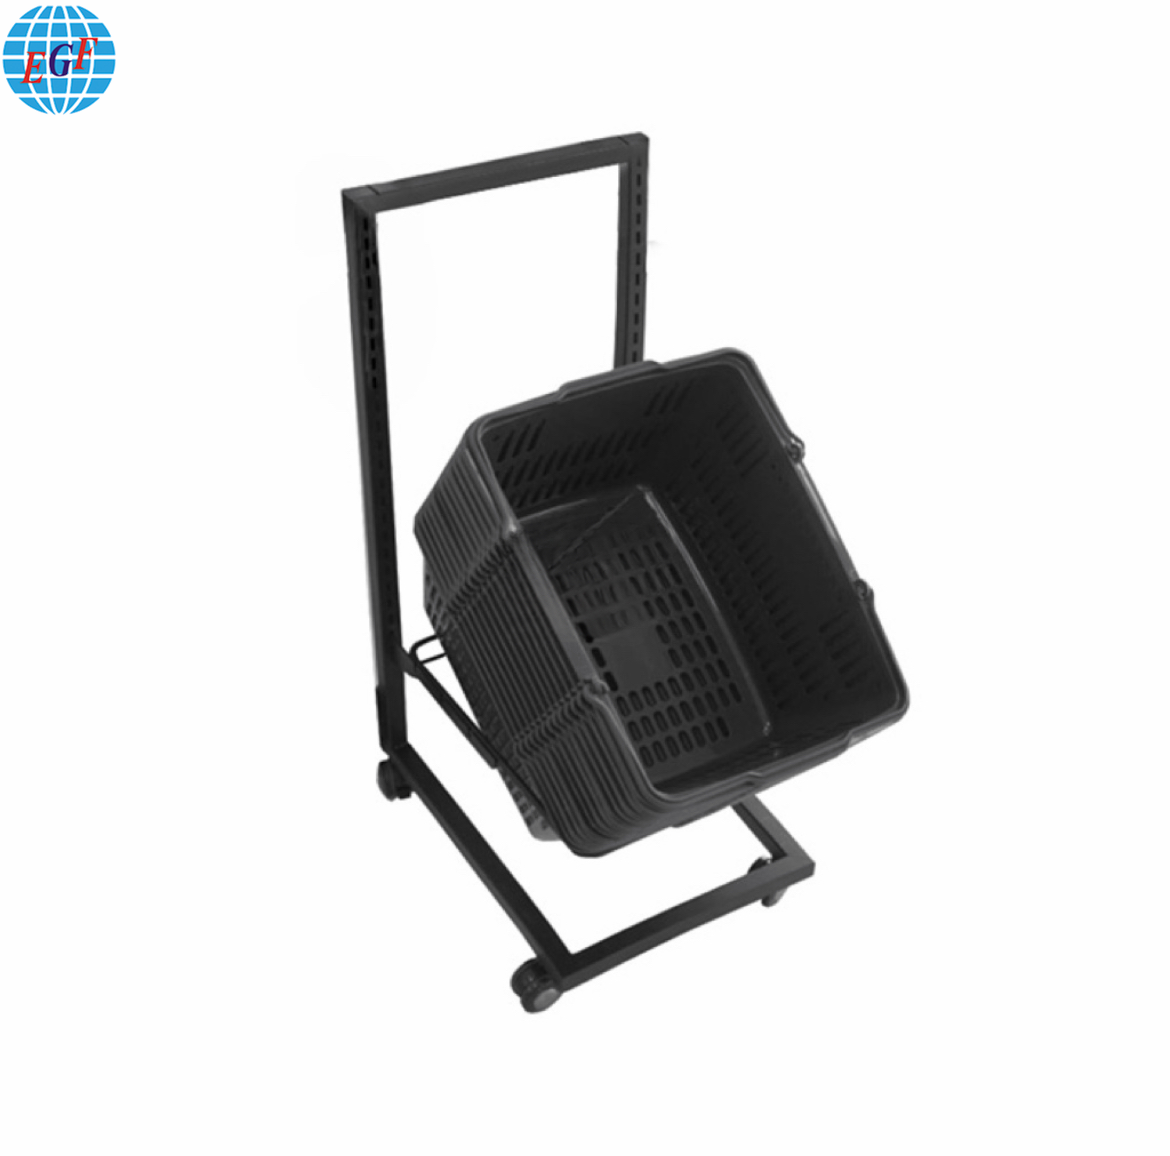 Adjustable Height Shopping Basket Rack with Smooth-Rolling Wheels - Ergonomic Design in Matte Black